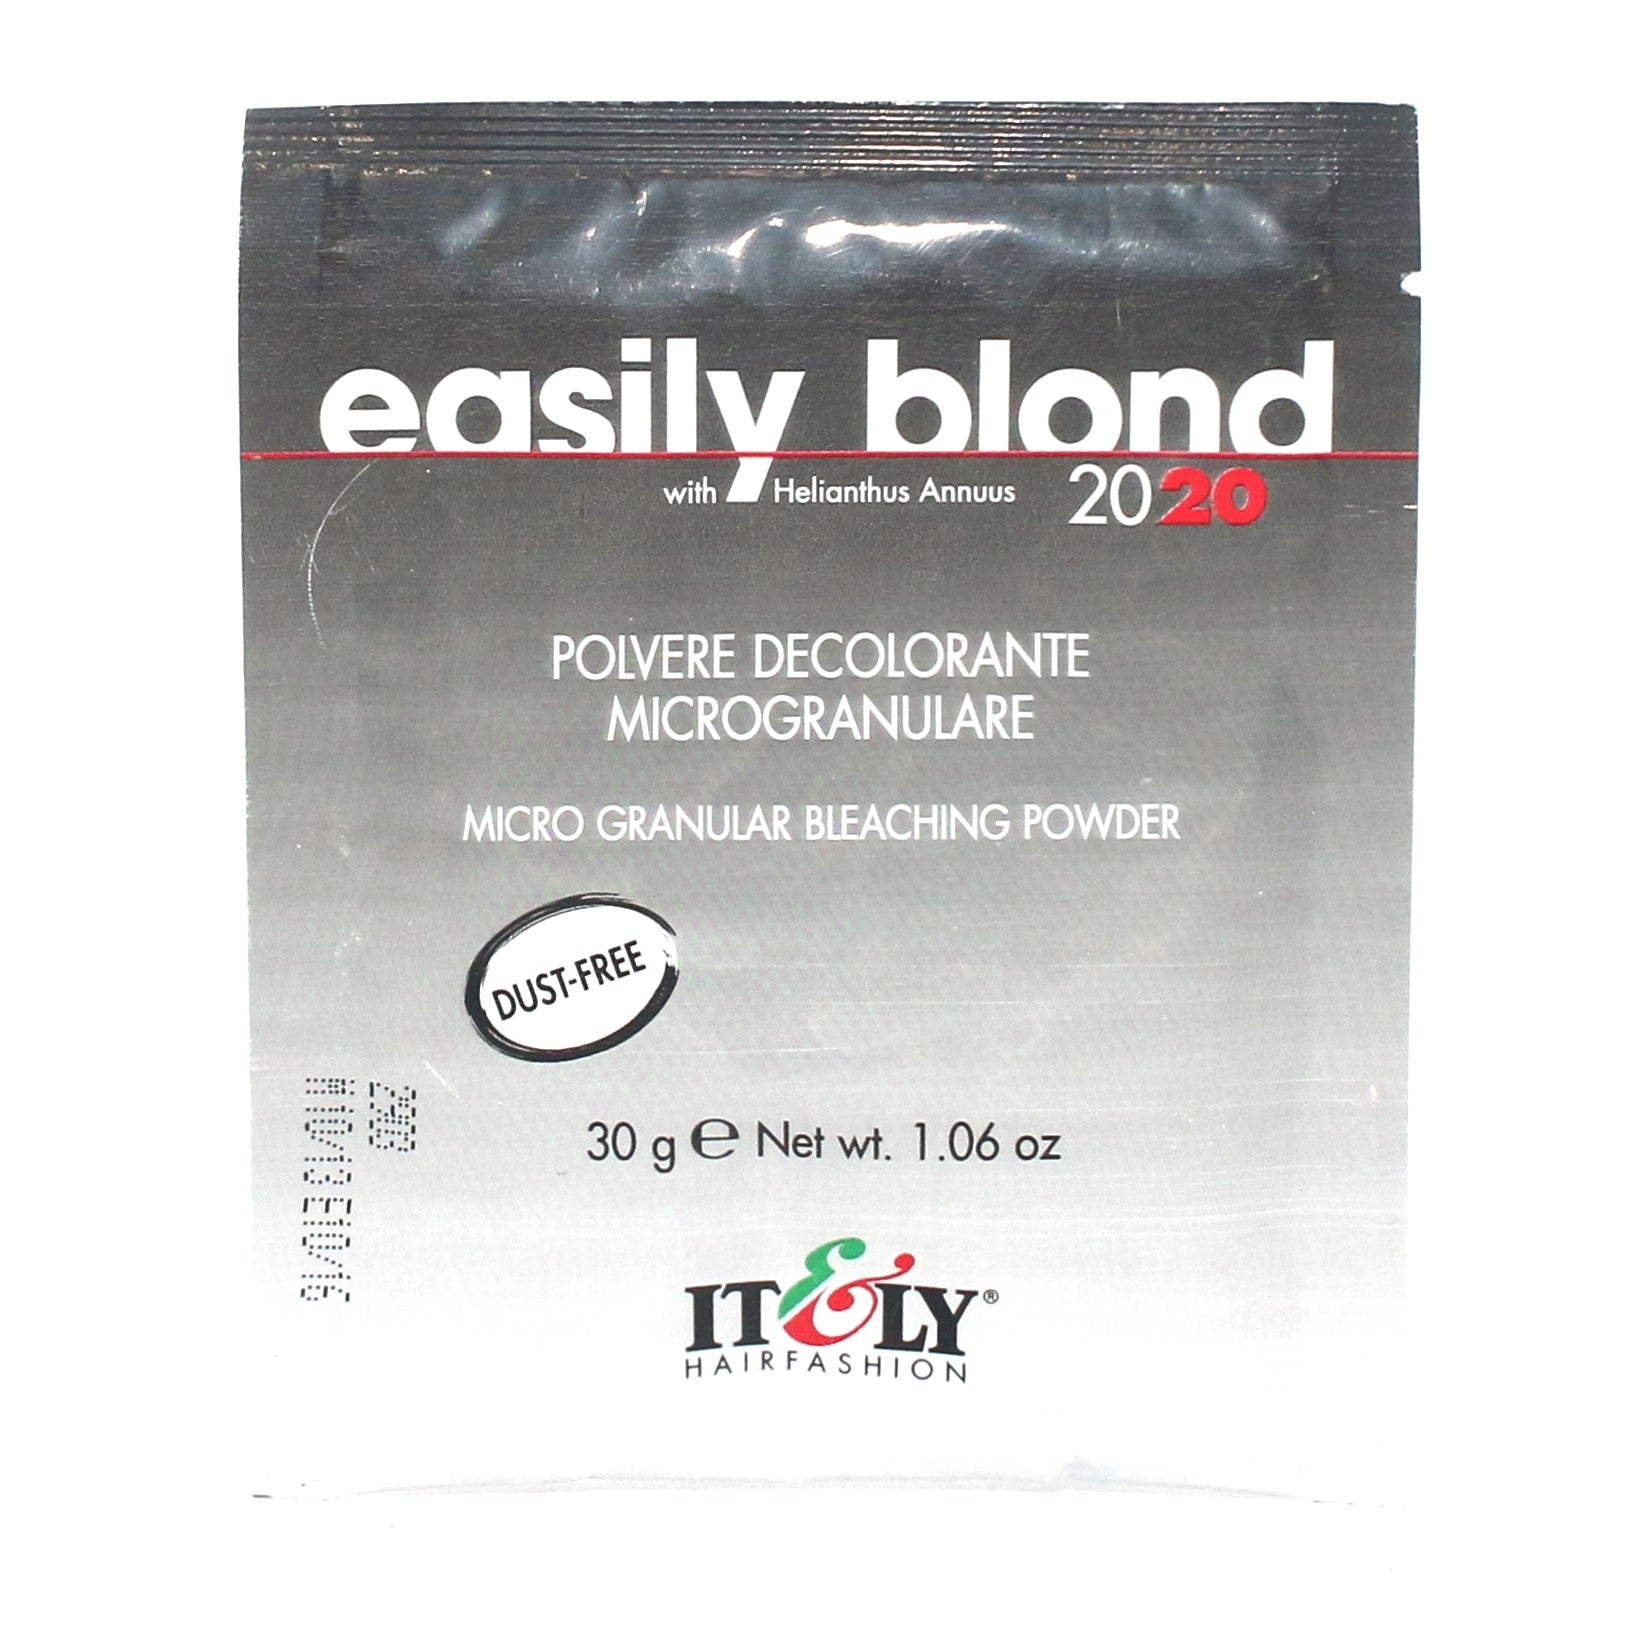 Itely Easily Blond 2020 Micro Granular Bleaching Powder 1.06 oz (Pack of 4)